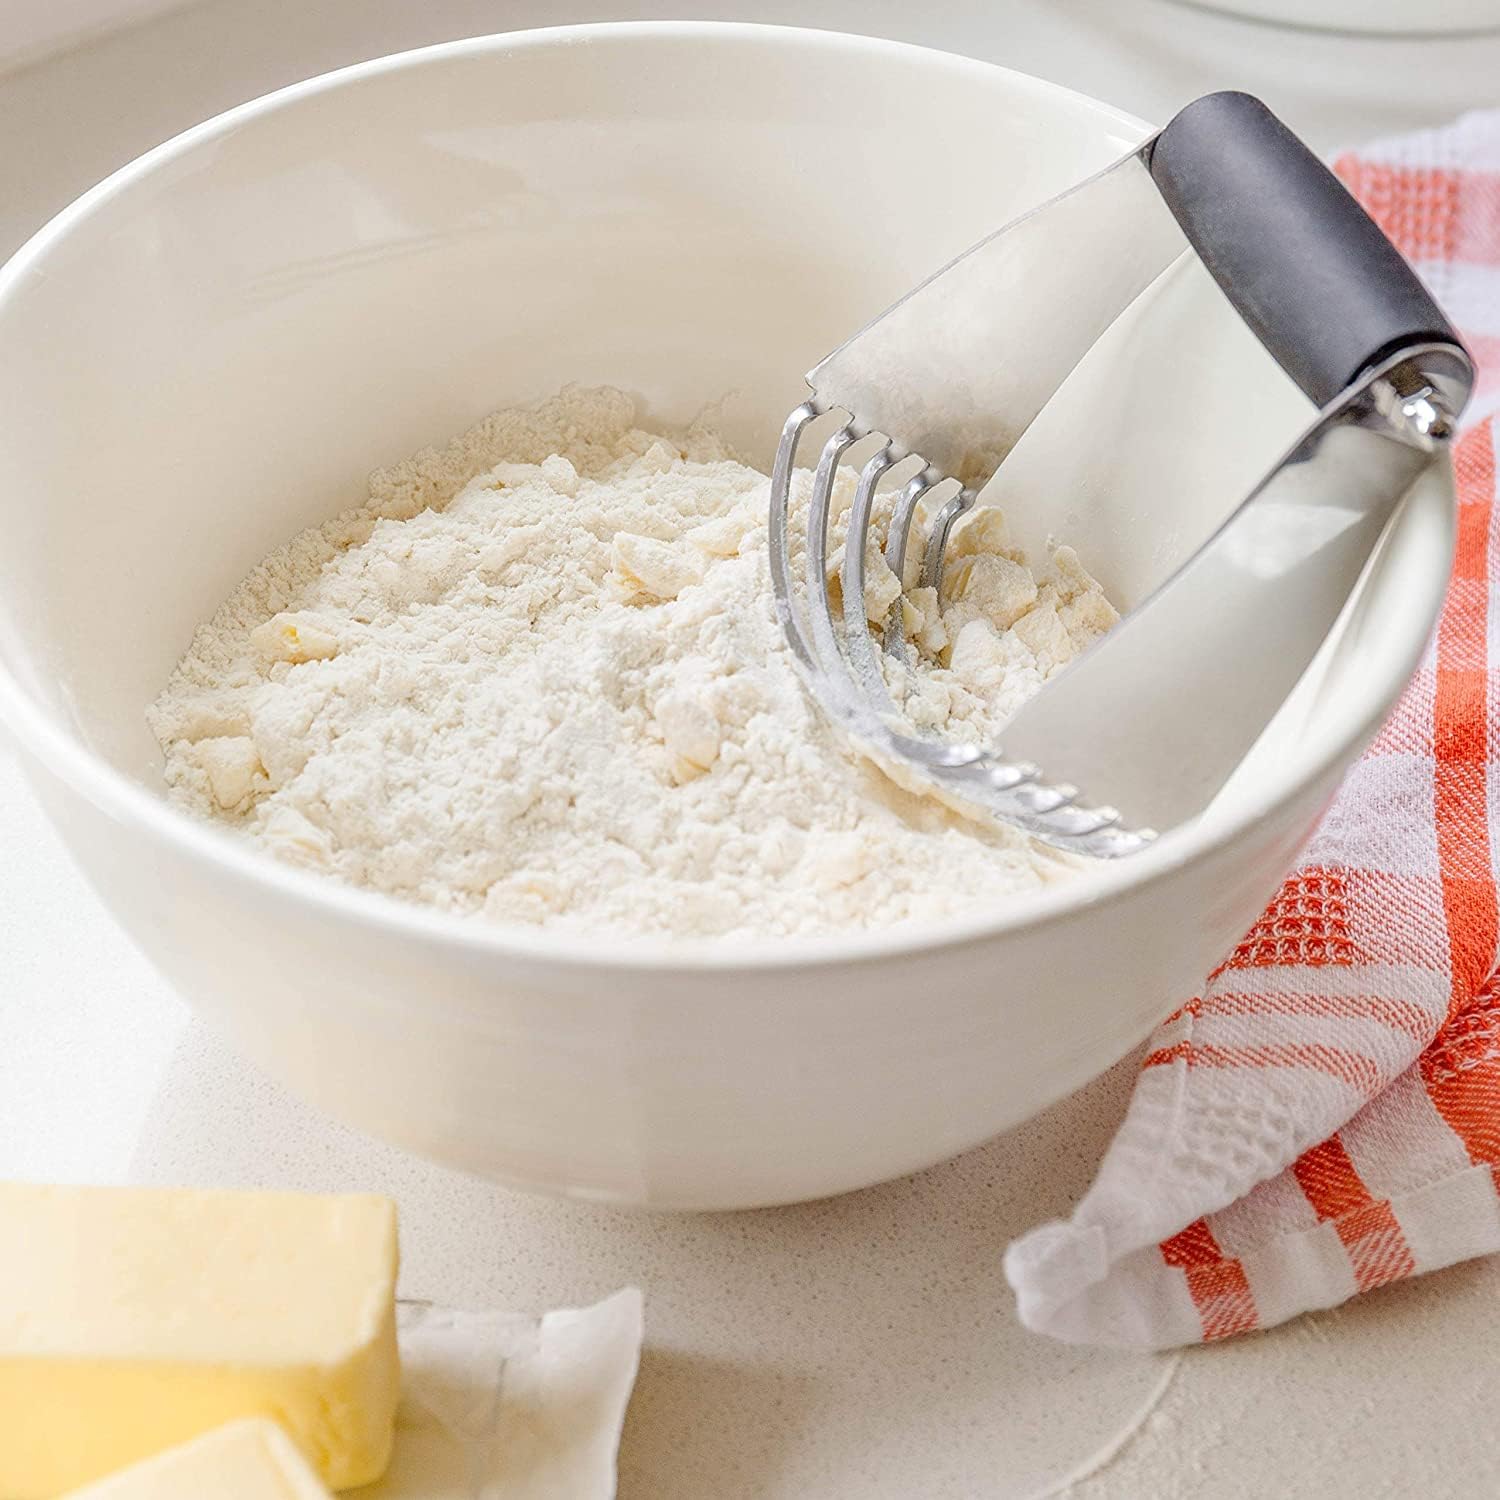 Get A Wholesale dough mixer/flour blender To Make Your Work Easier